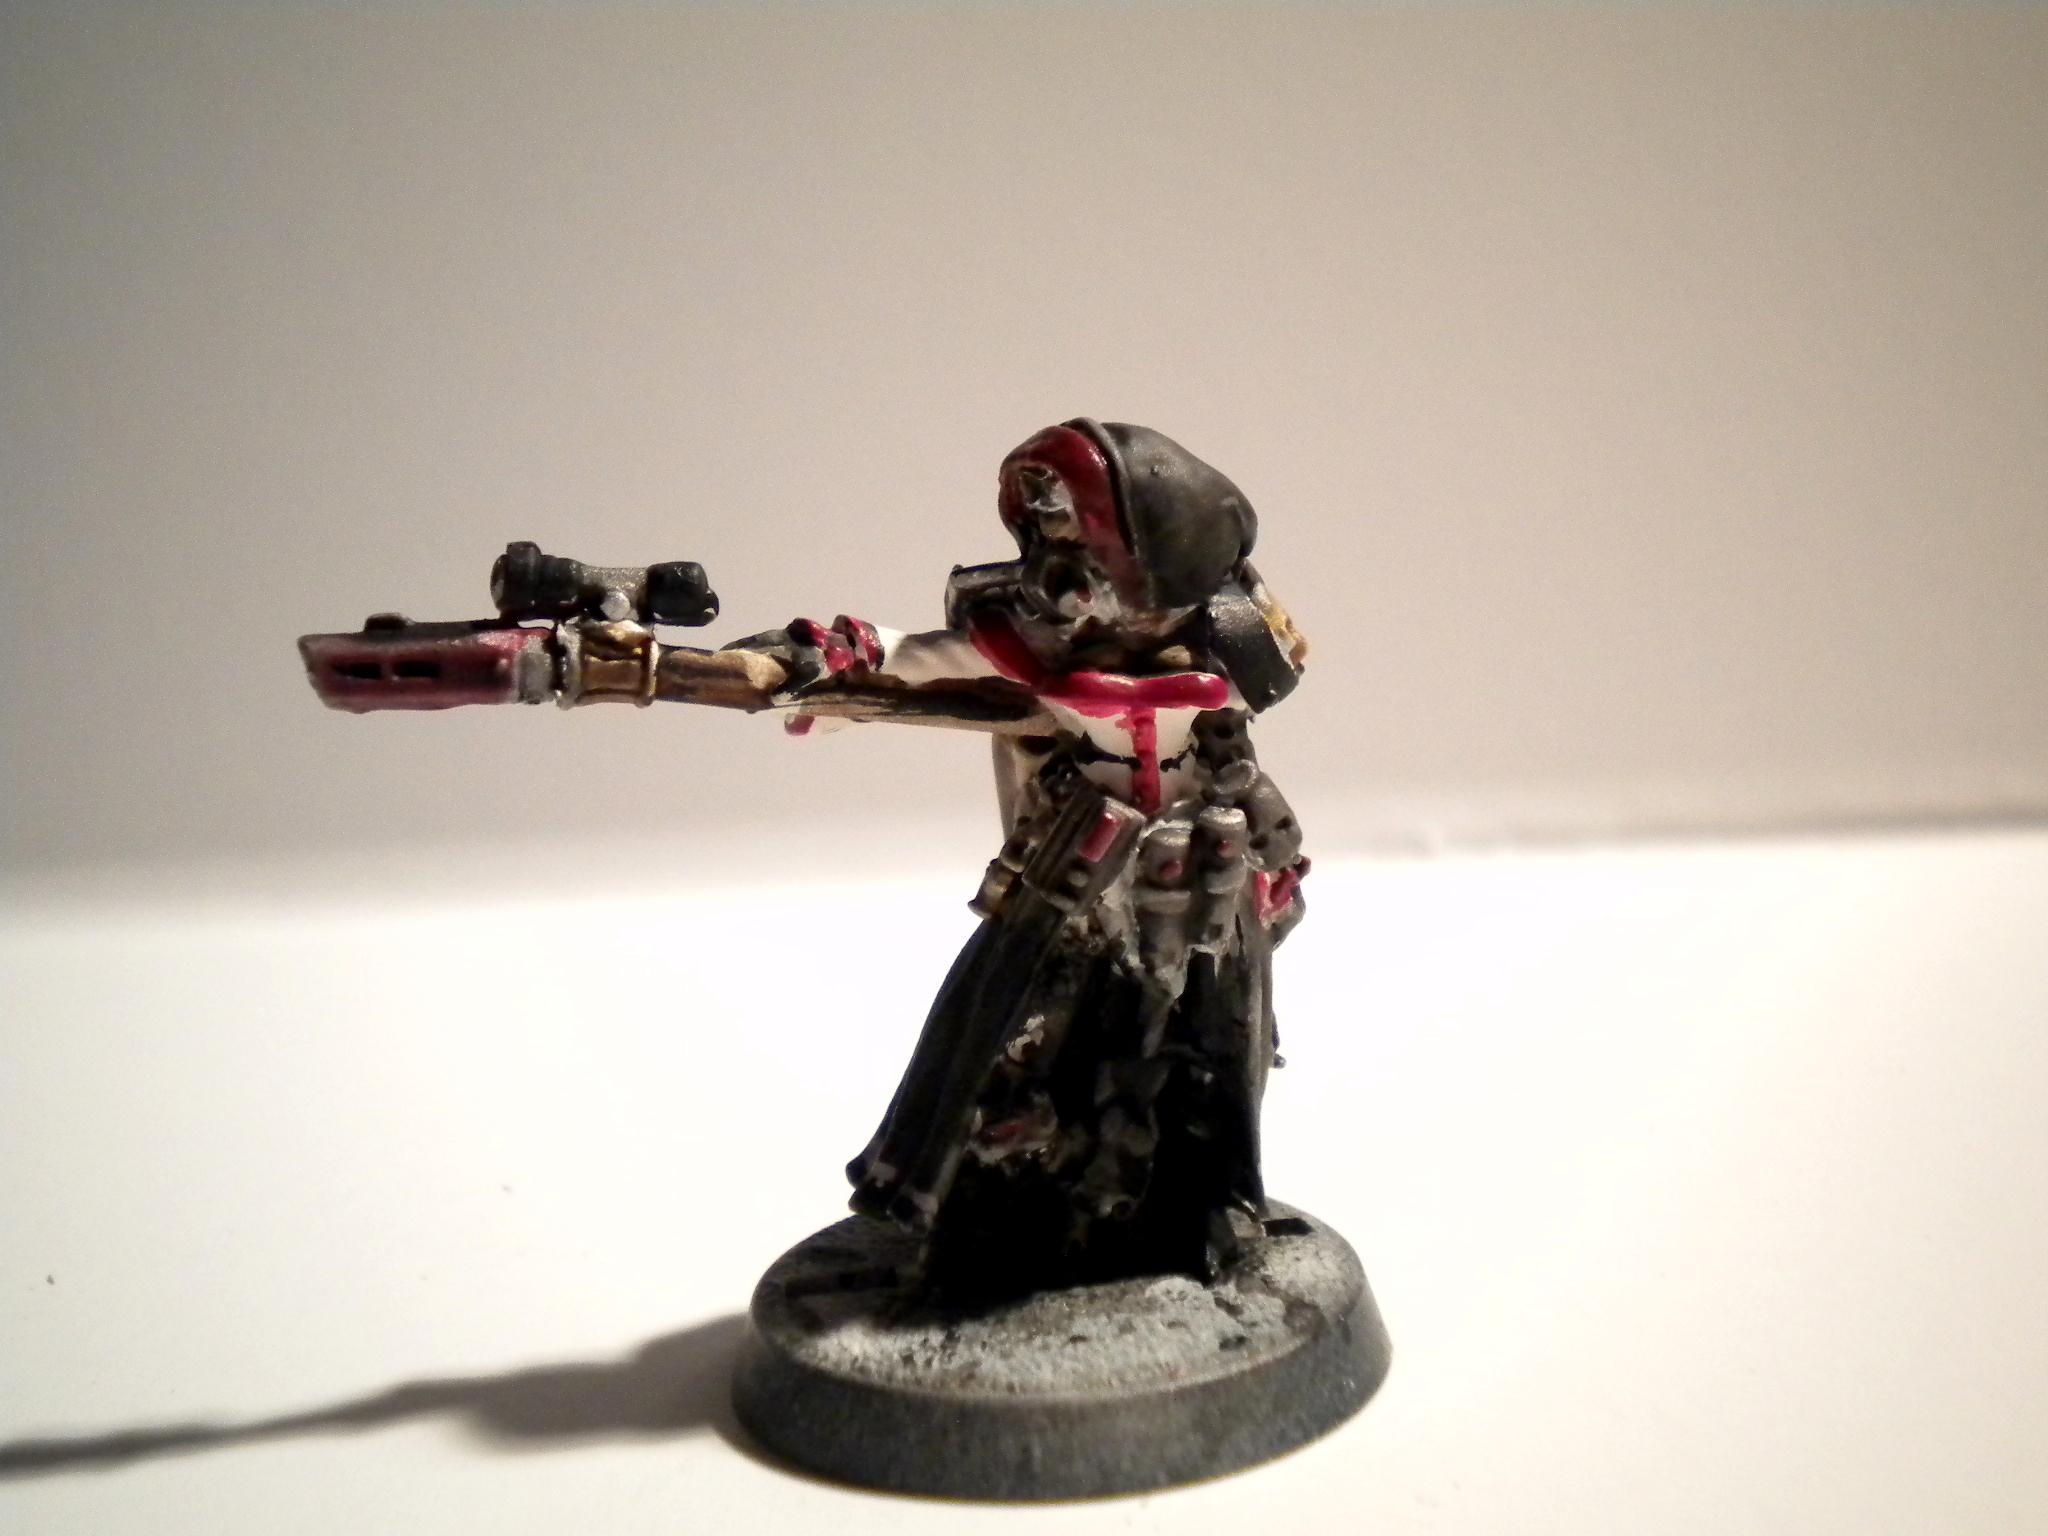 Inquisitor Valencia